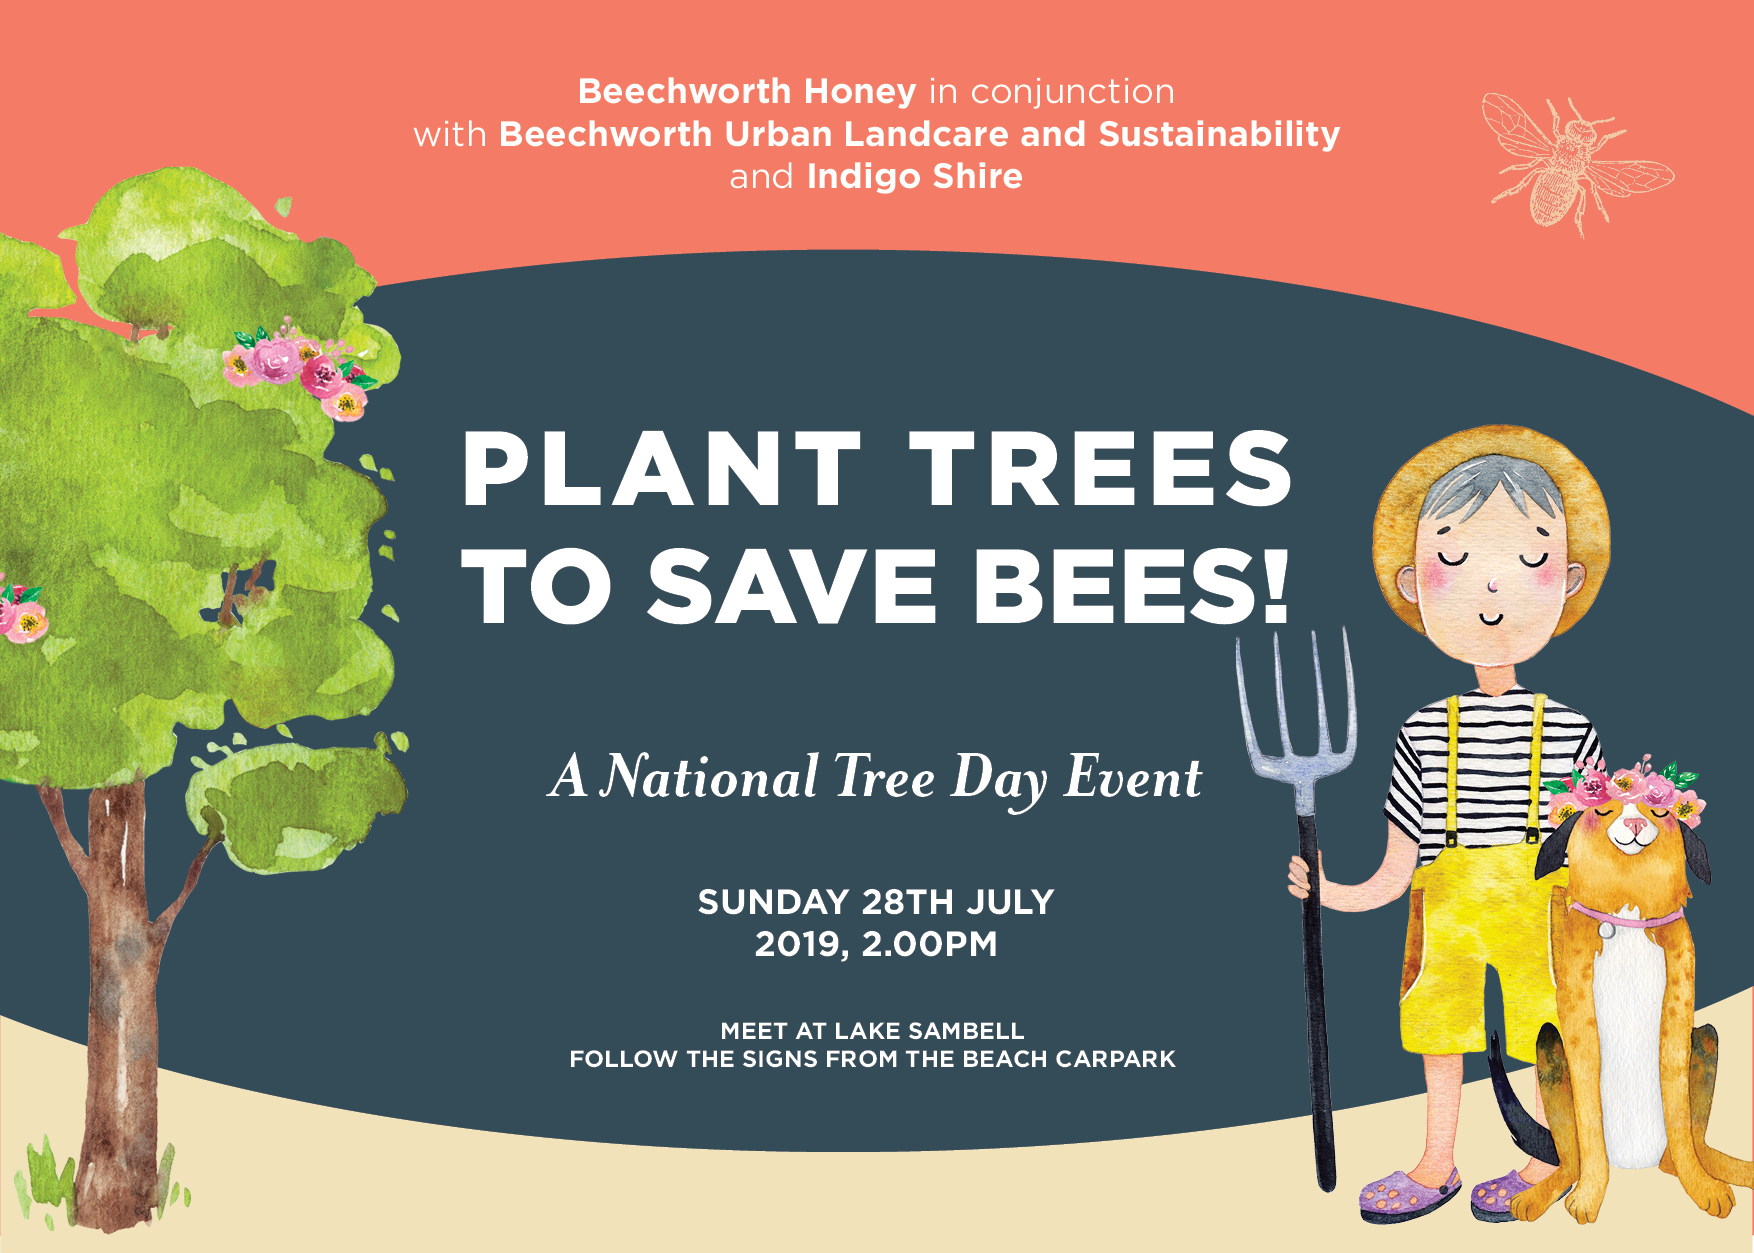 National Tree Day planting at Beechworth Ecoportal